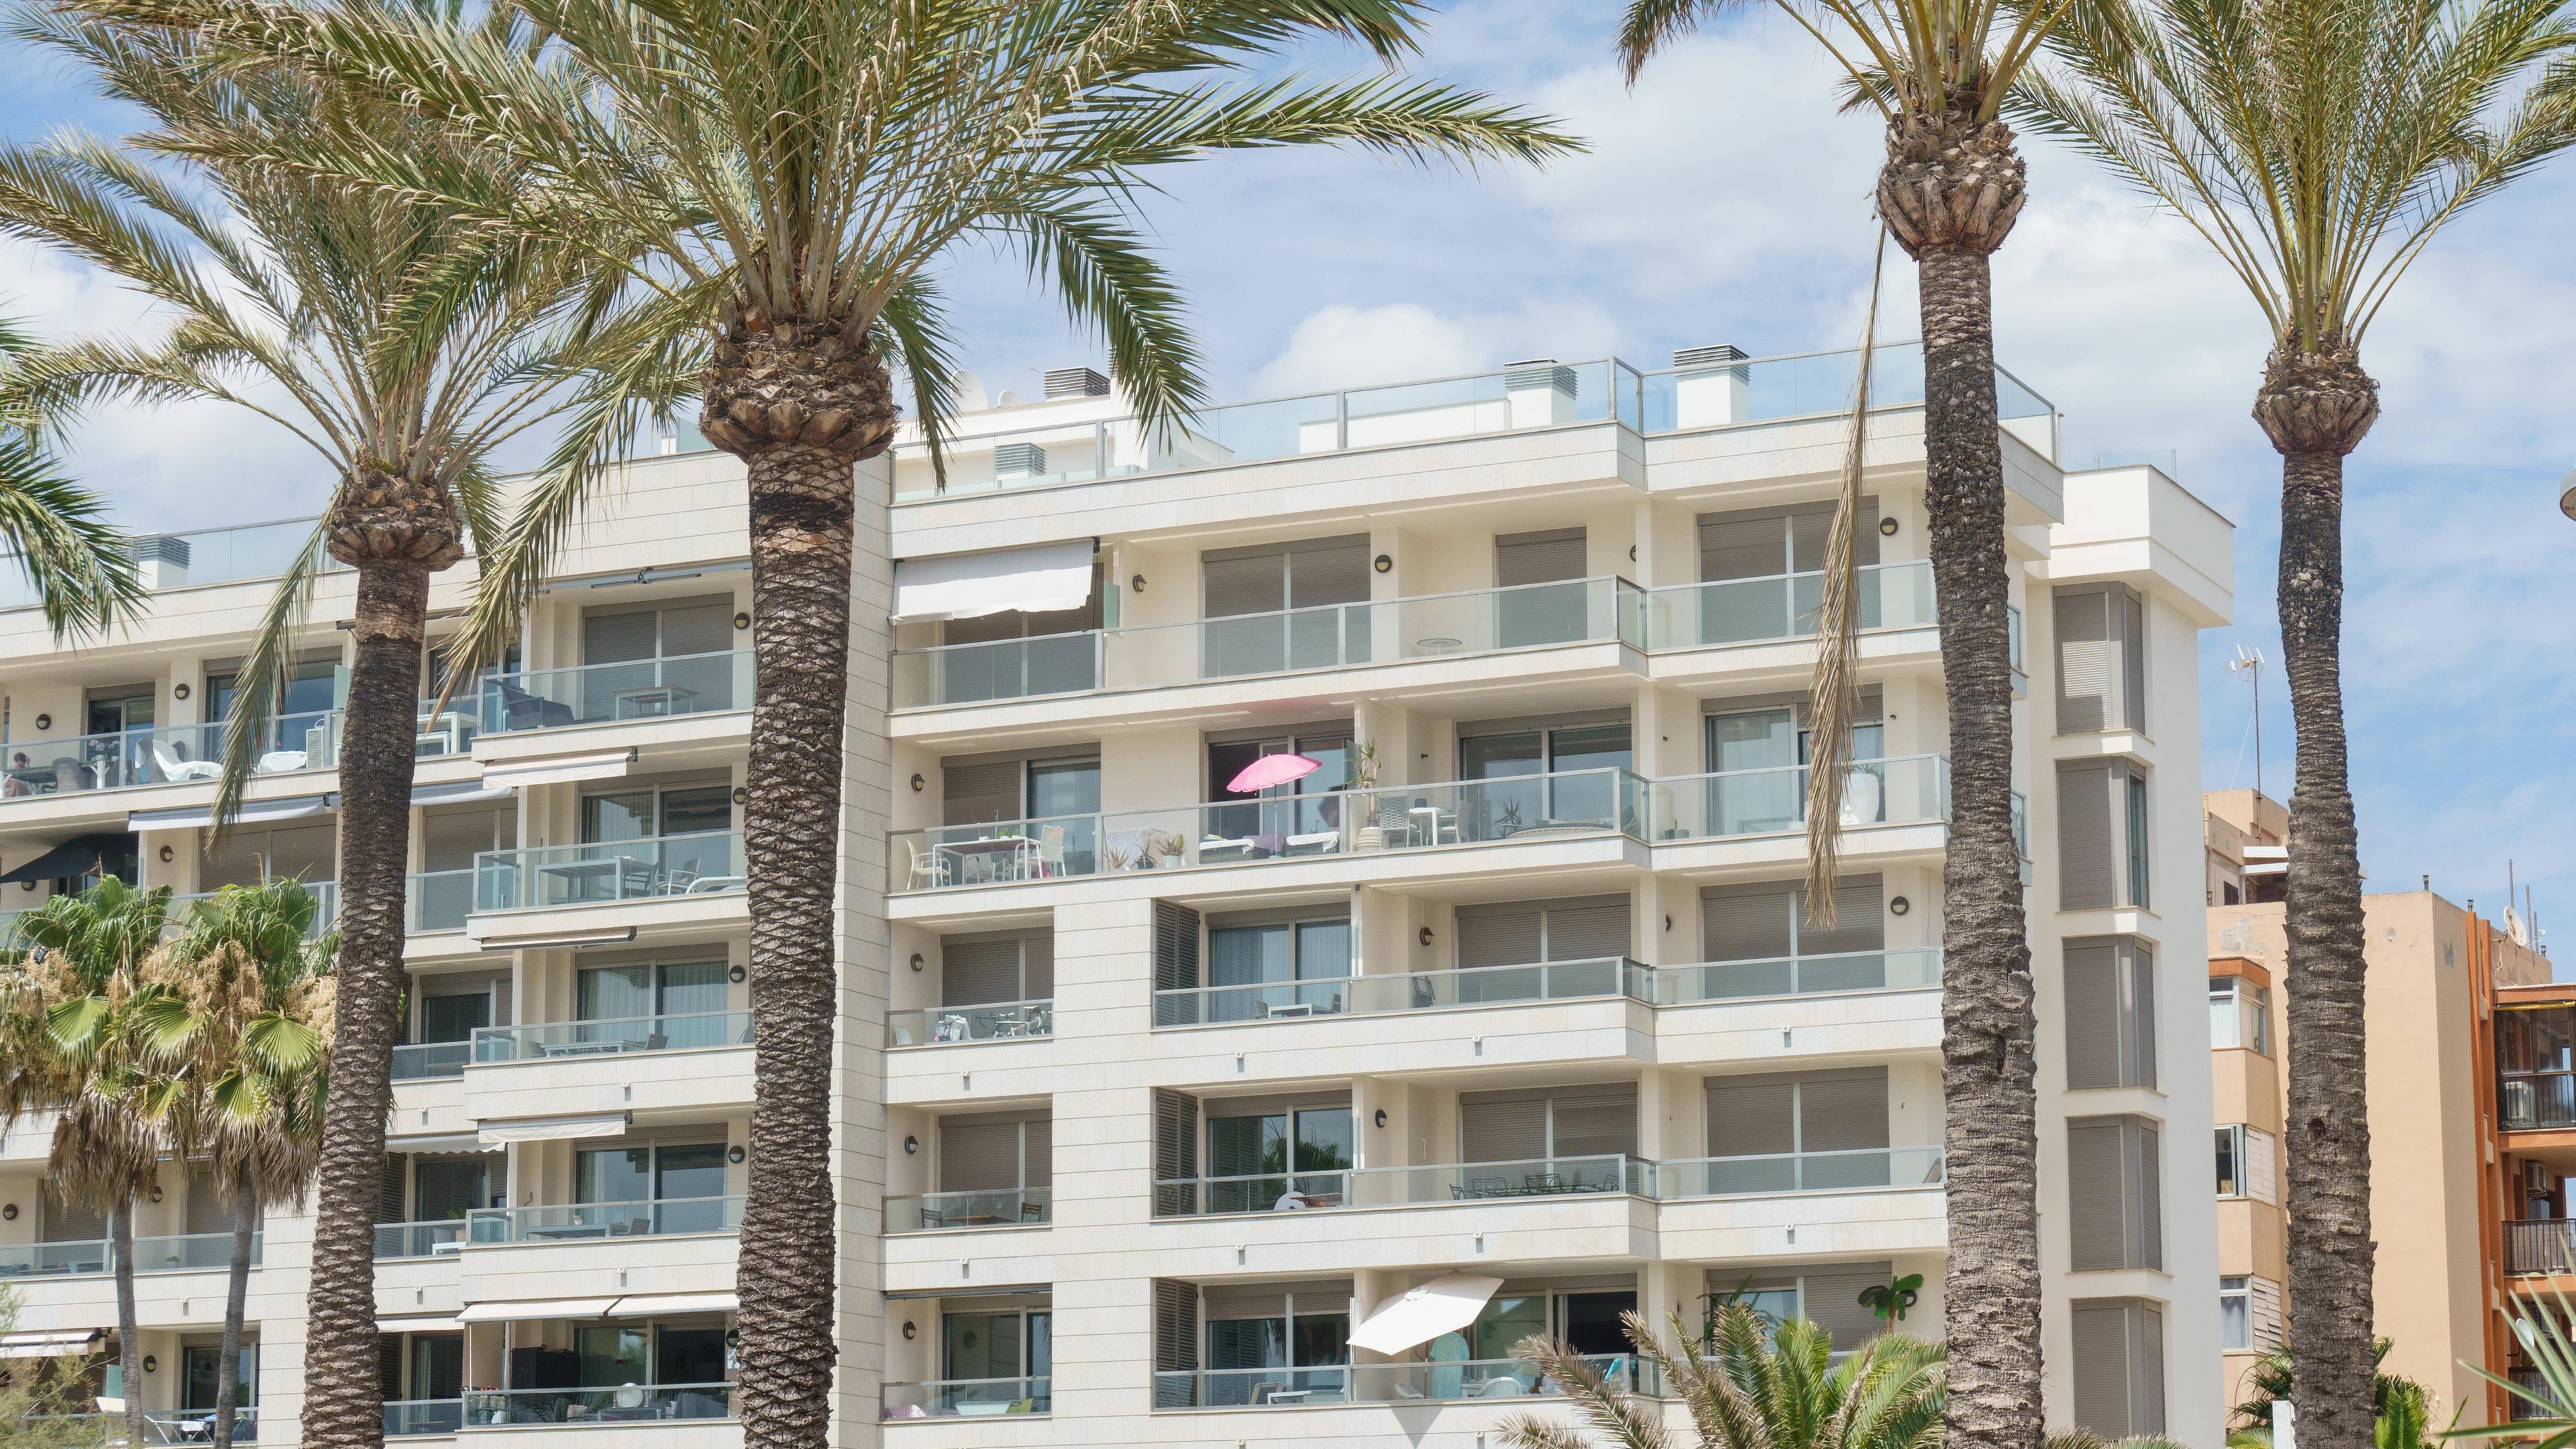 Spanien, Mallorca: Balkone eines Hotels in Palma, Symbolbild